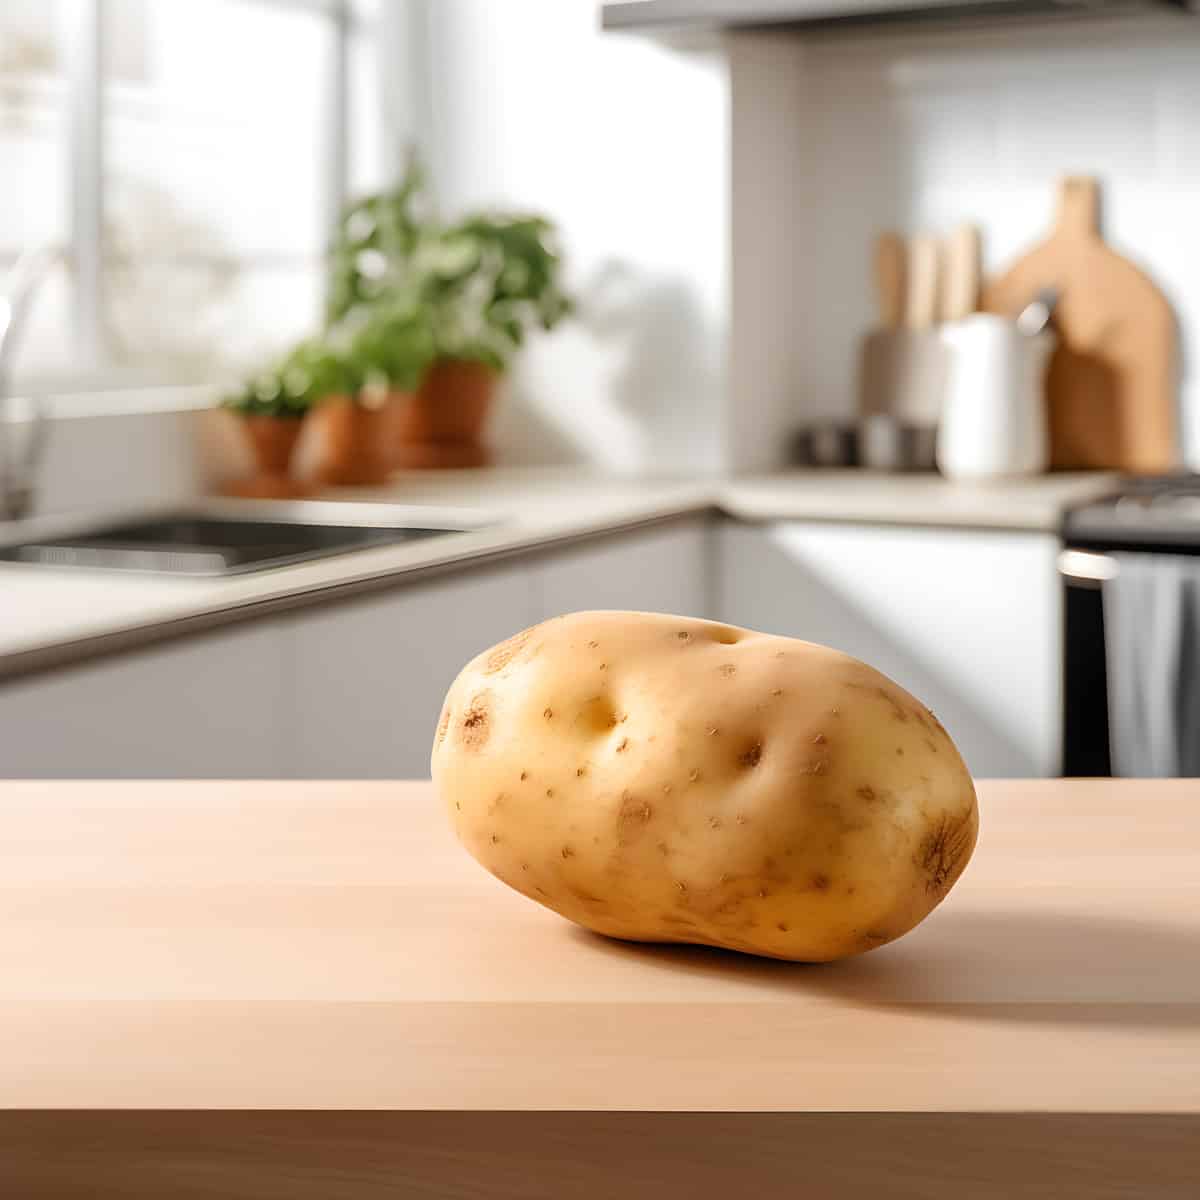 Estima Potatoes on a kitchen counter